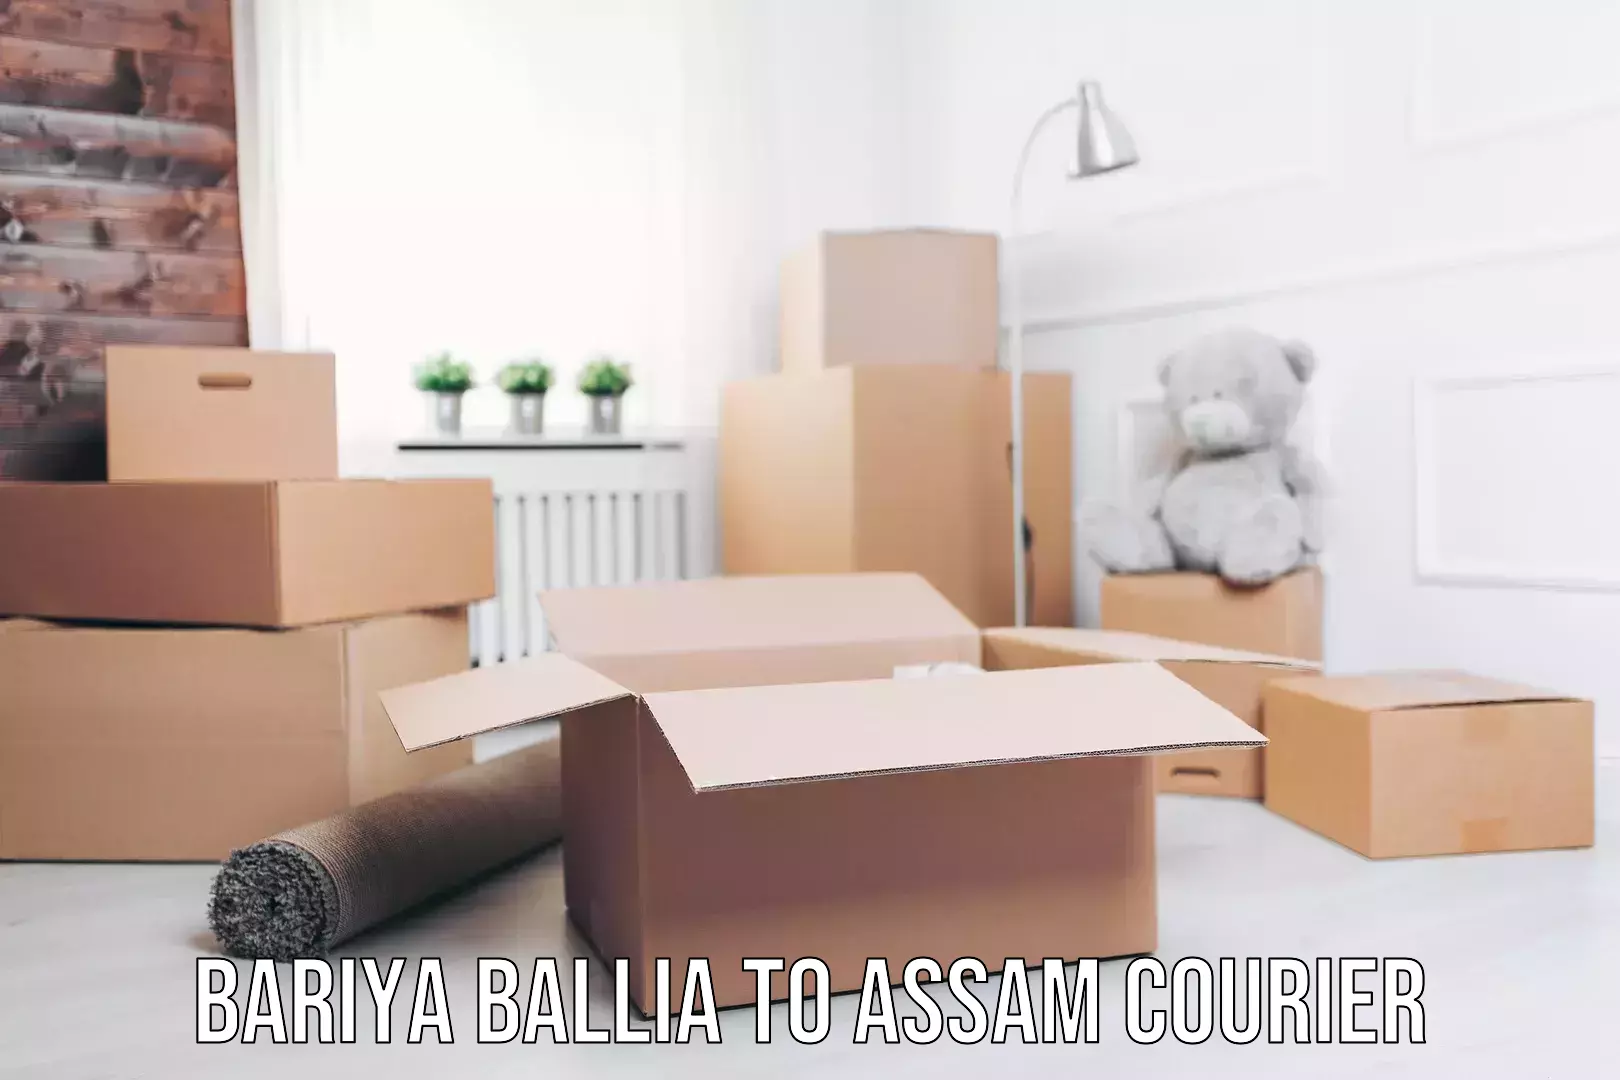 Courier service innovation Bariya Ballia to Assam